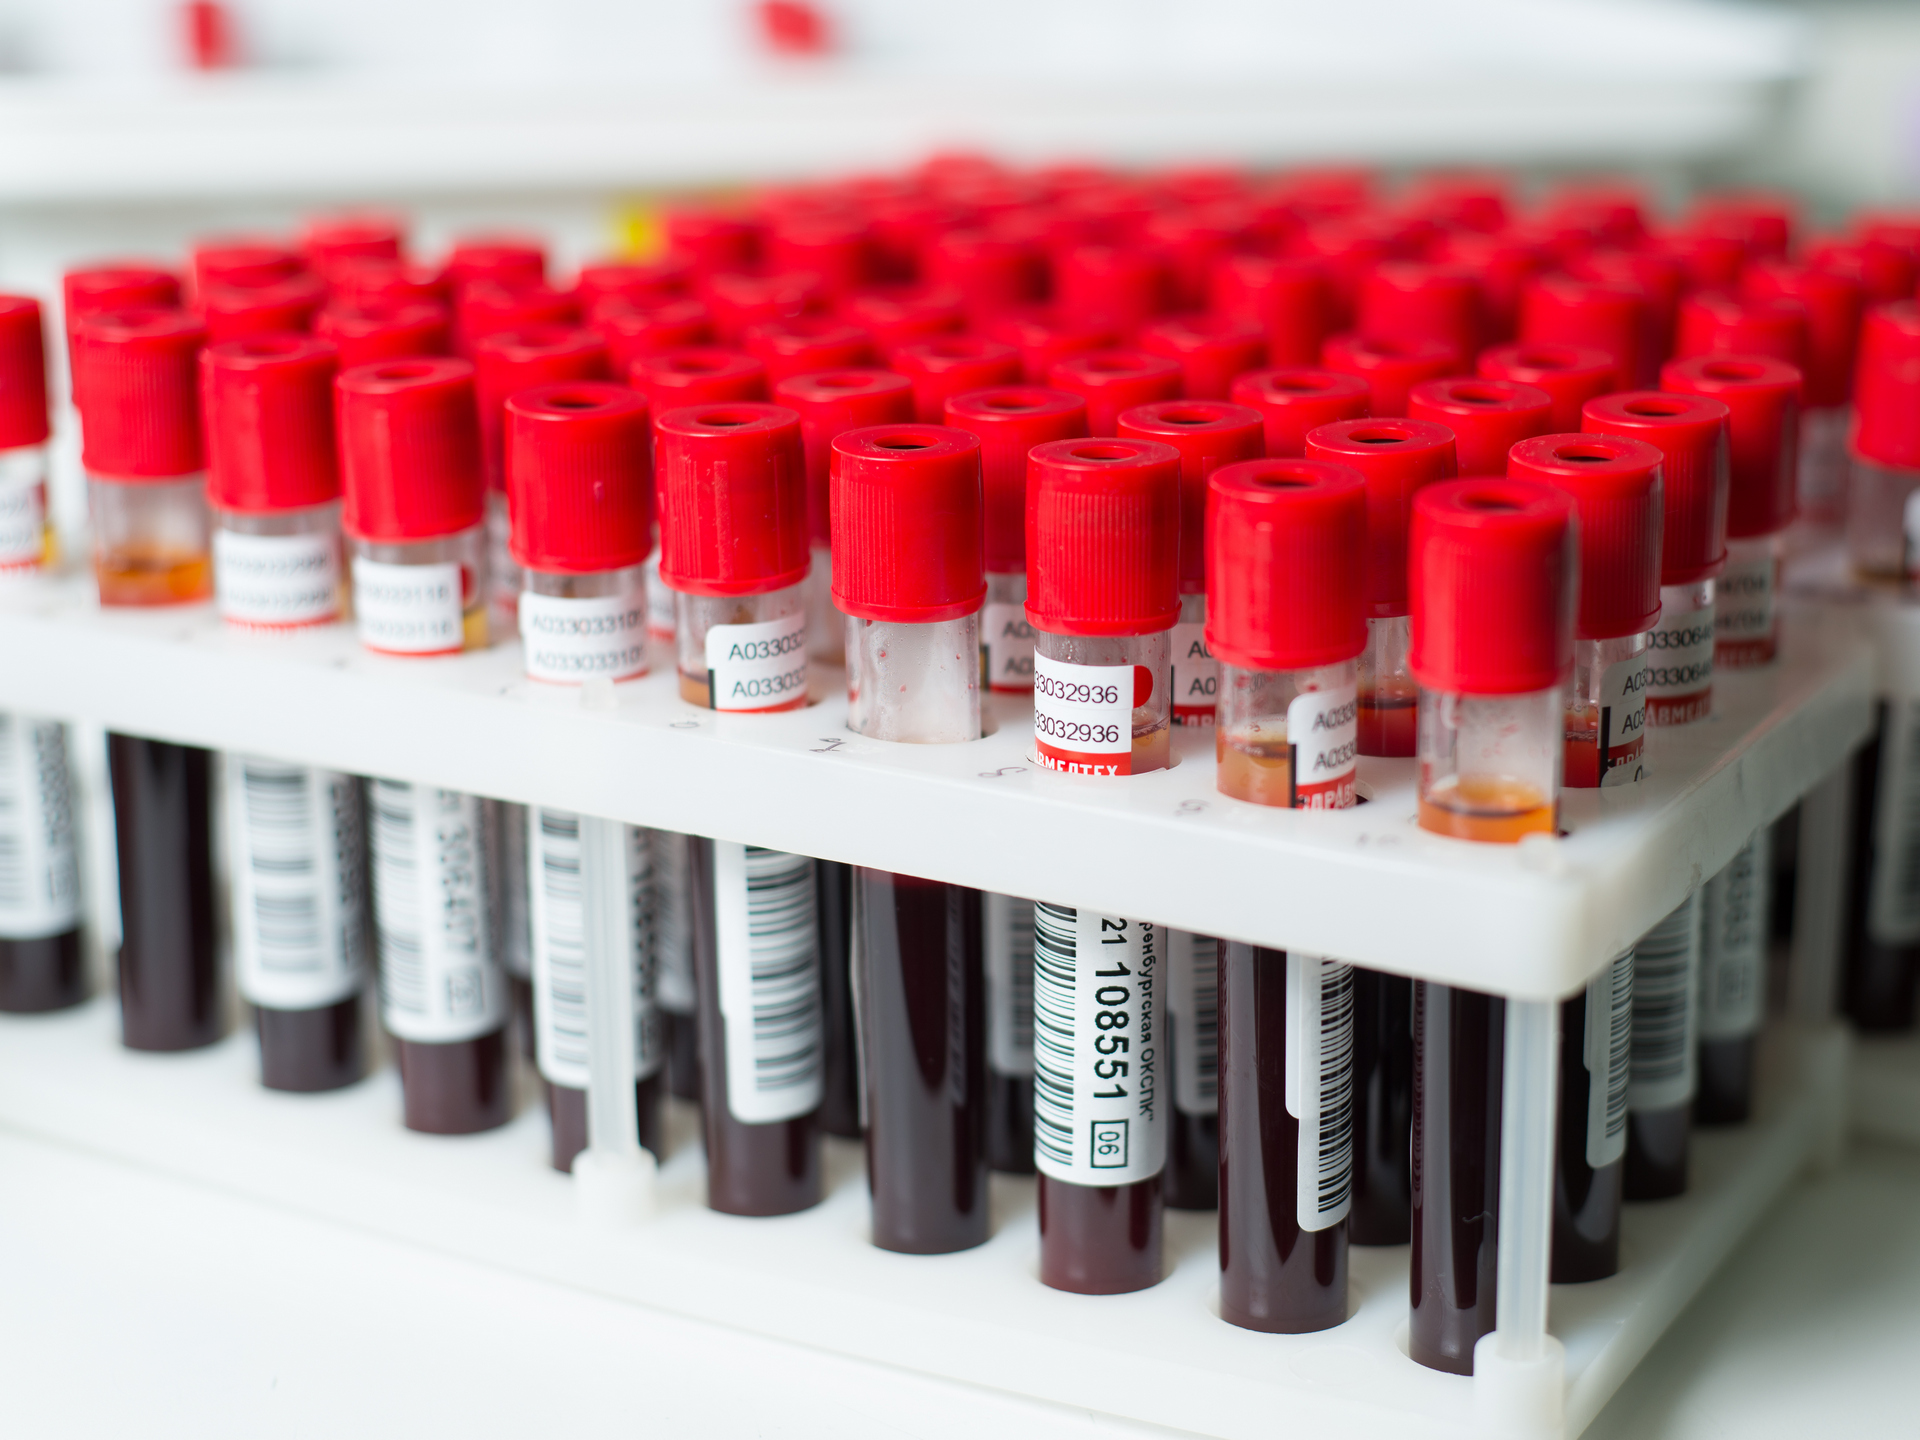 ГБУЗ "ООКСПК" предоставляет широкий спектр исследований крови